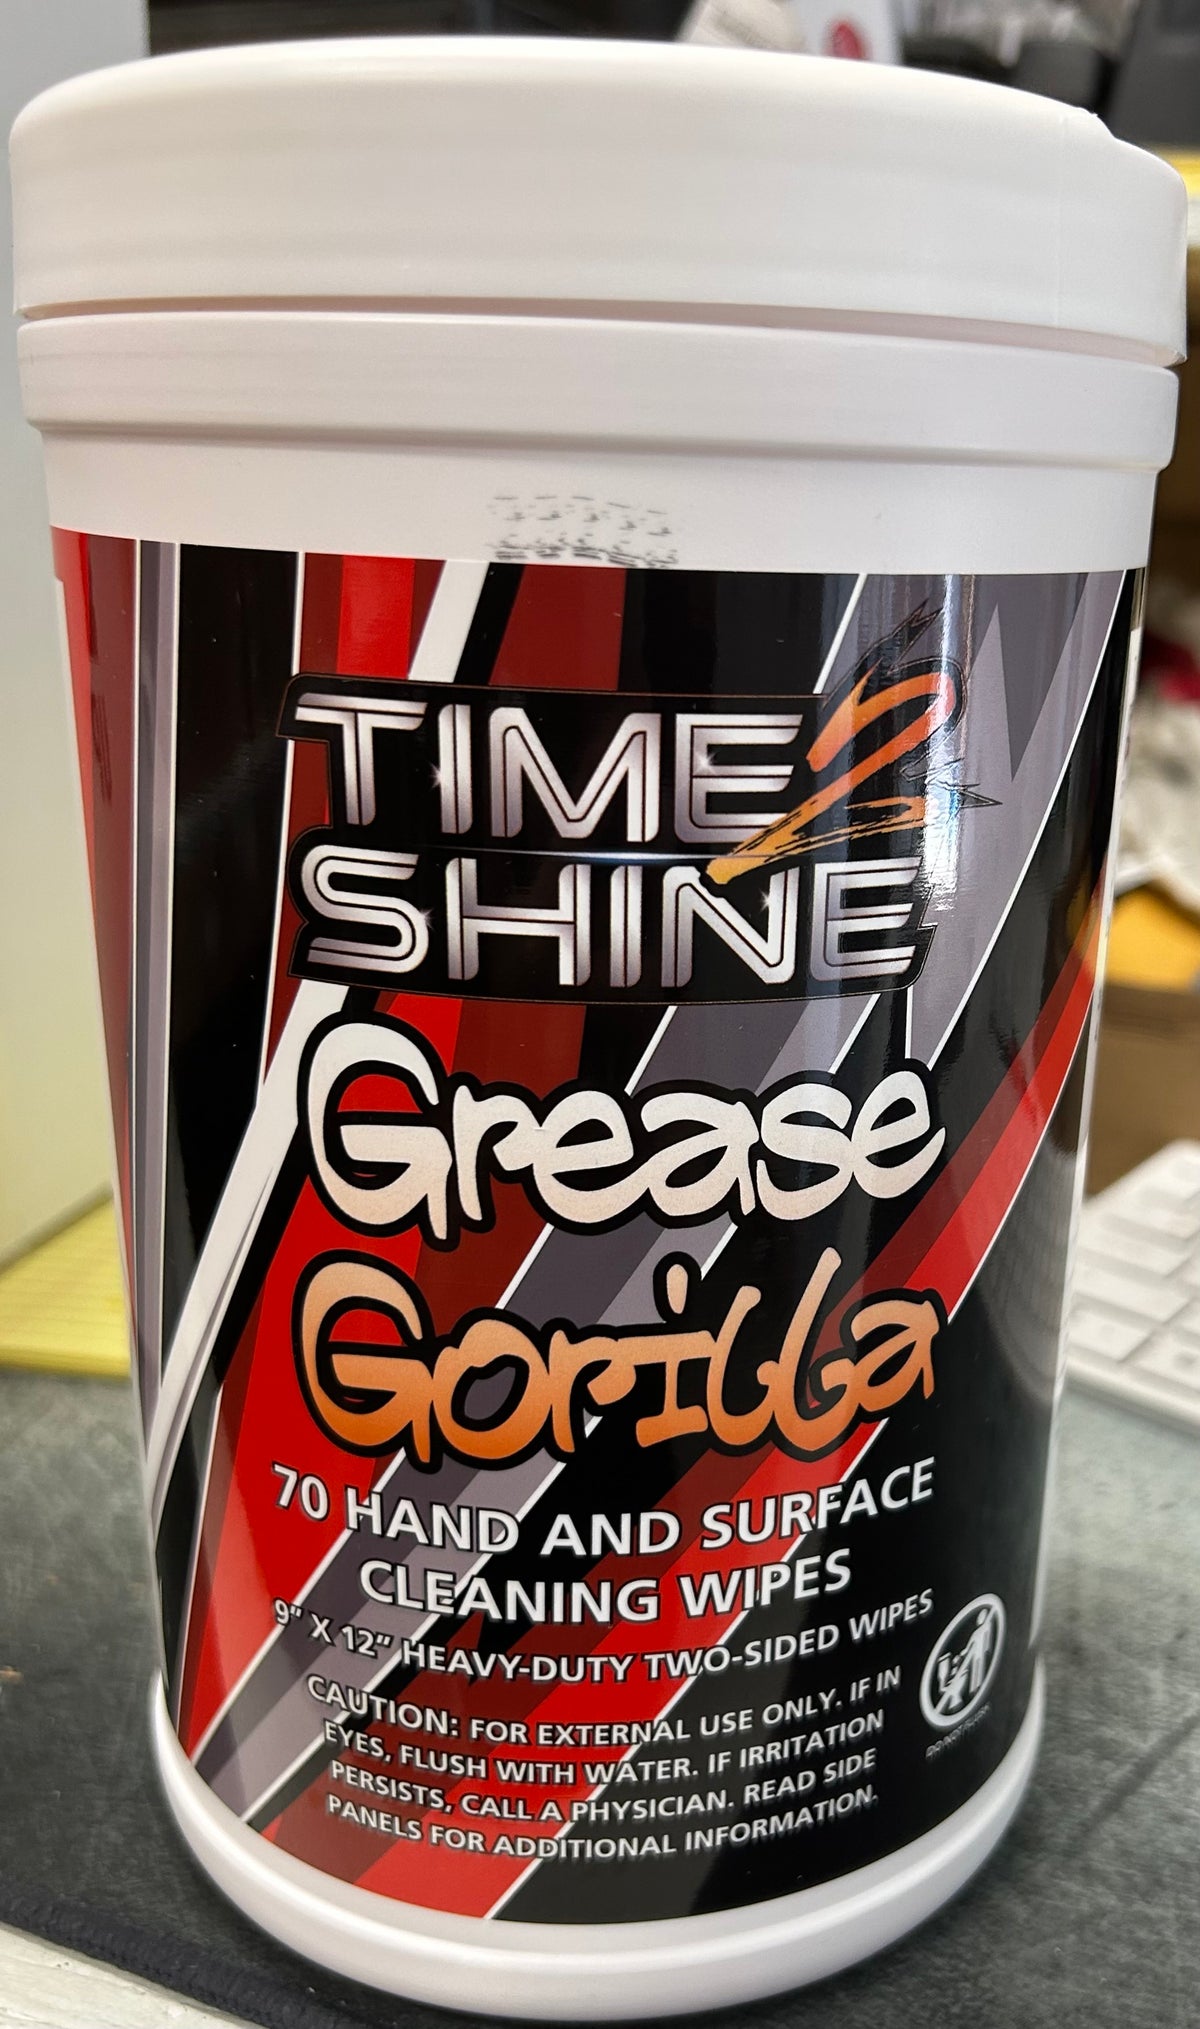 Time 2 Shine Grease Gorilla